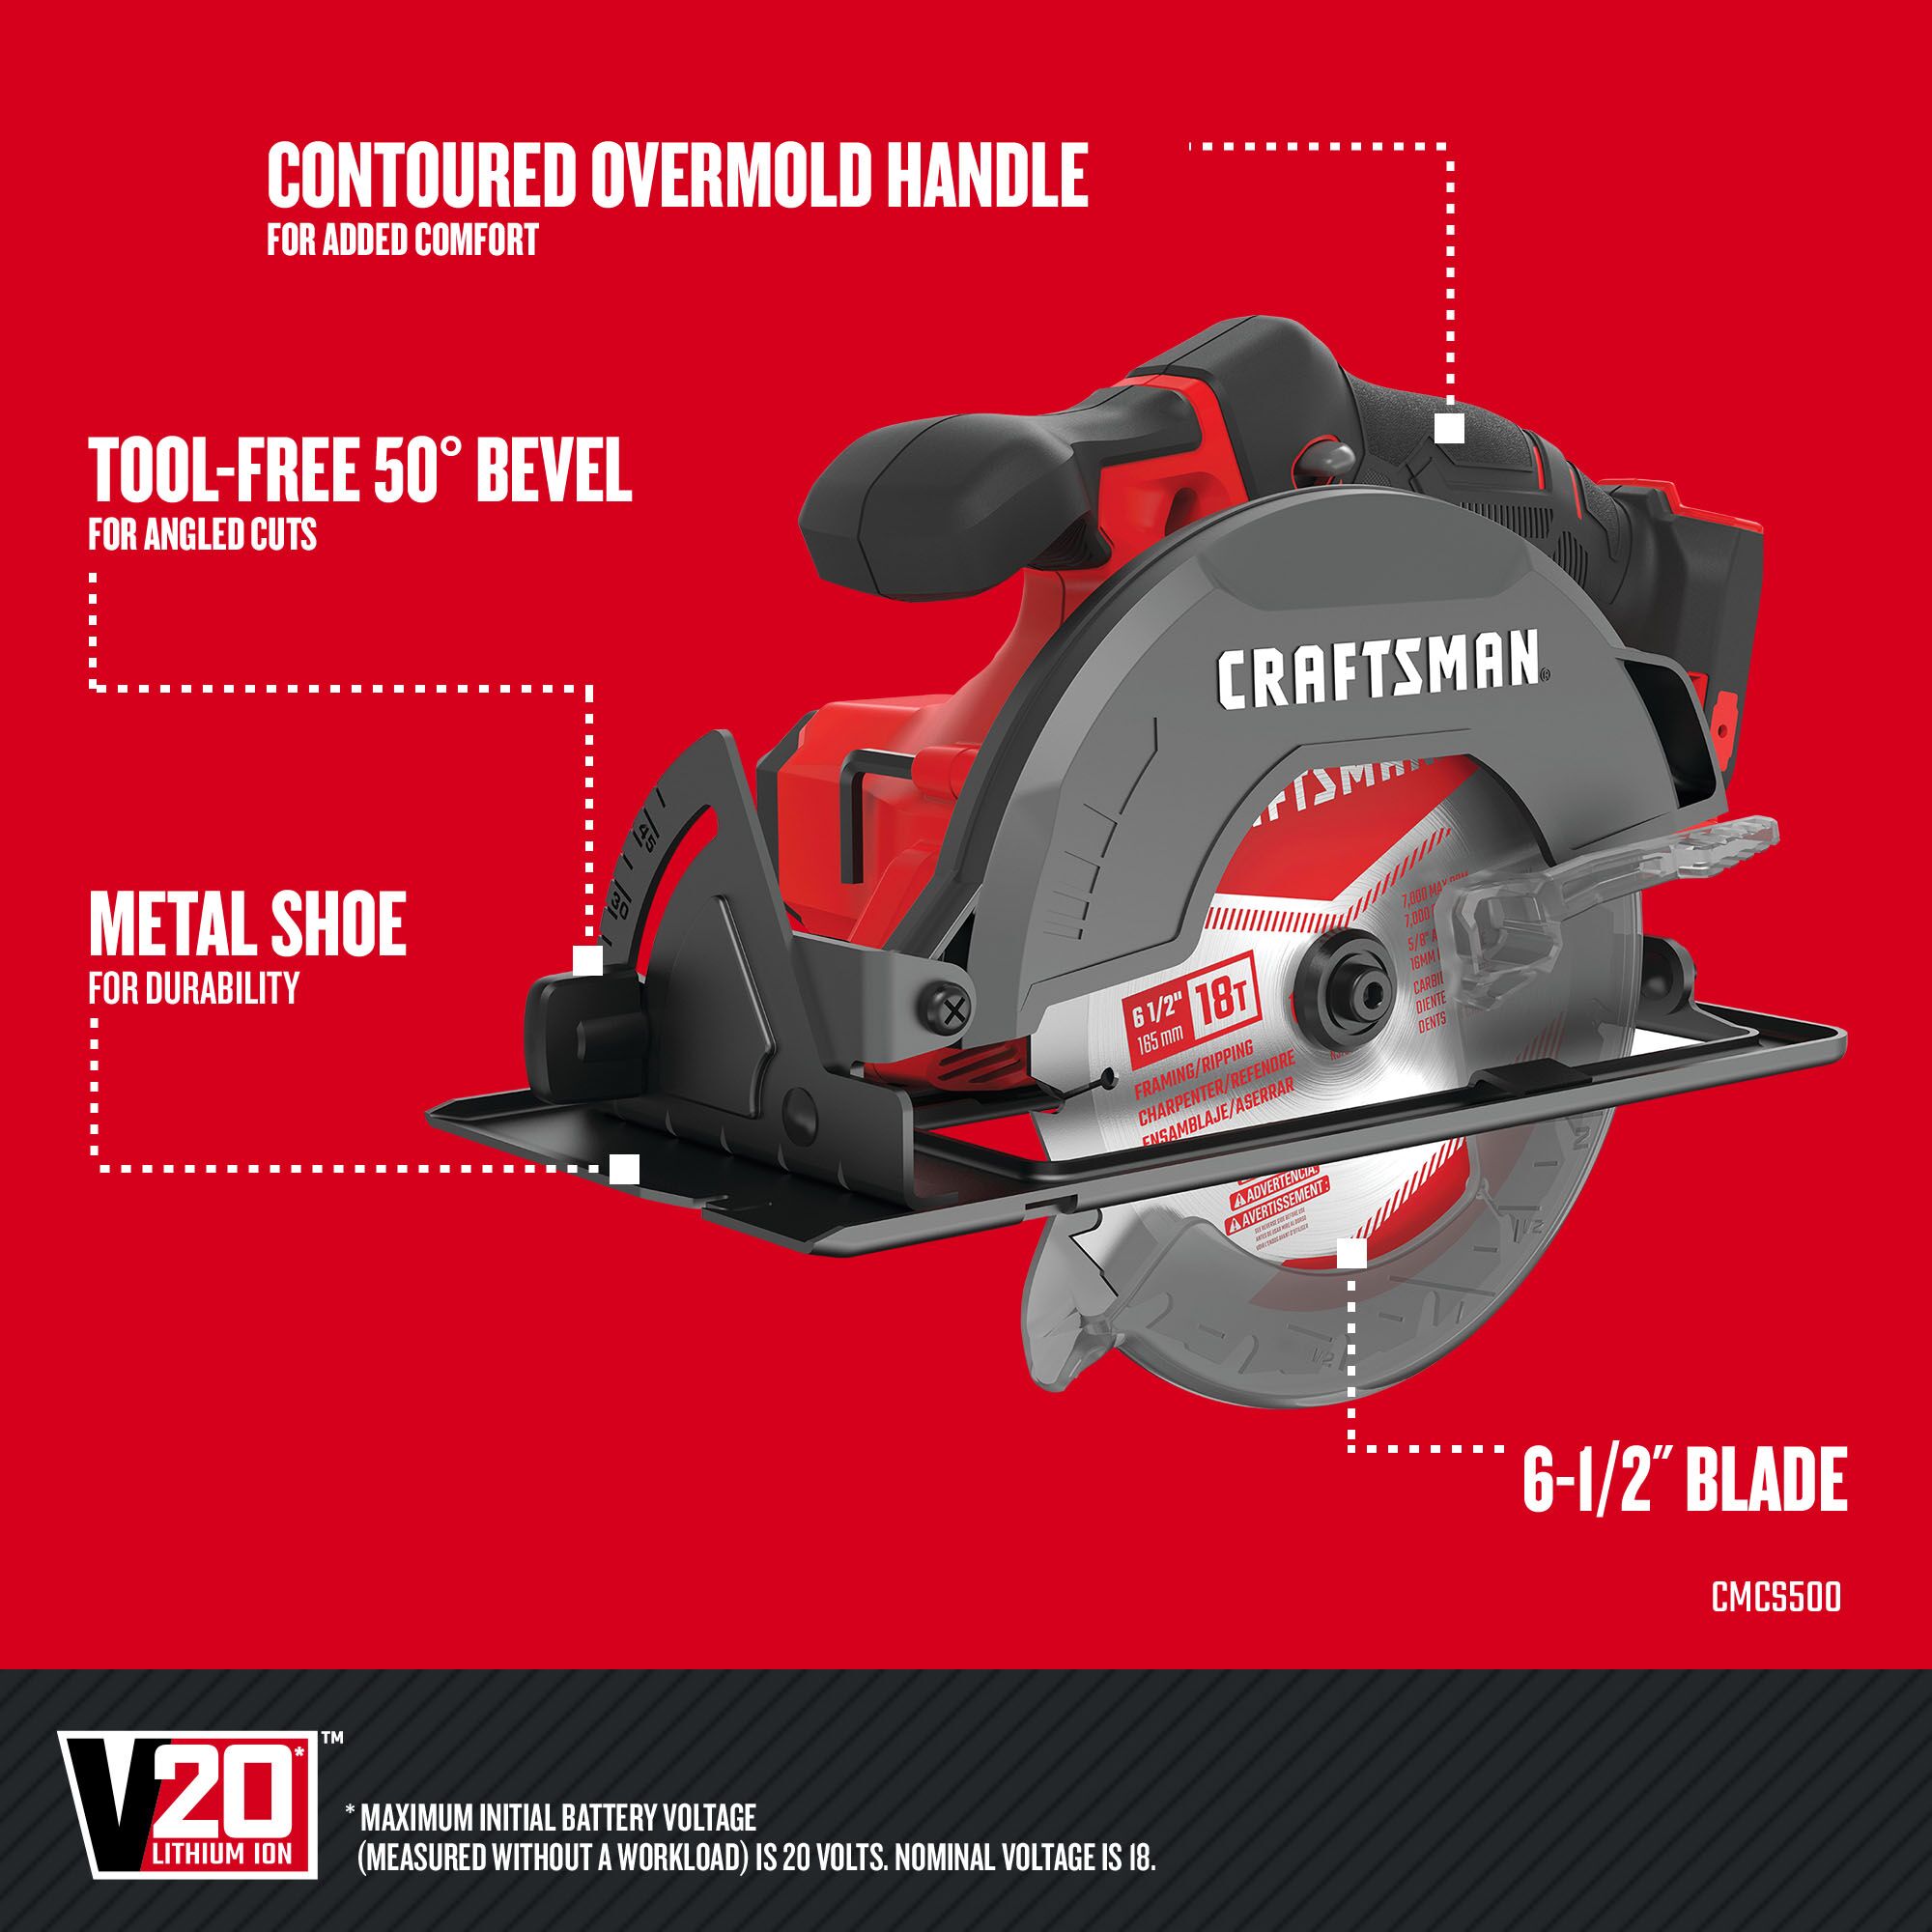 CRAFTSMAN V20 20-volt Max 6-1/2-in Cordless Compact Circular Saw (Bare Tool)  in the Circular Saws department at